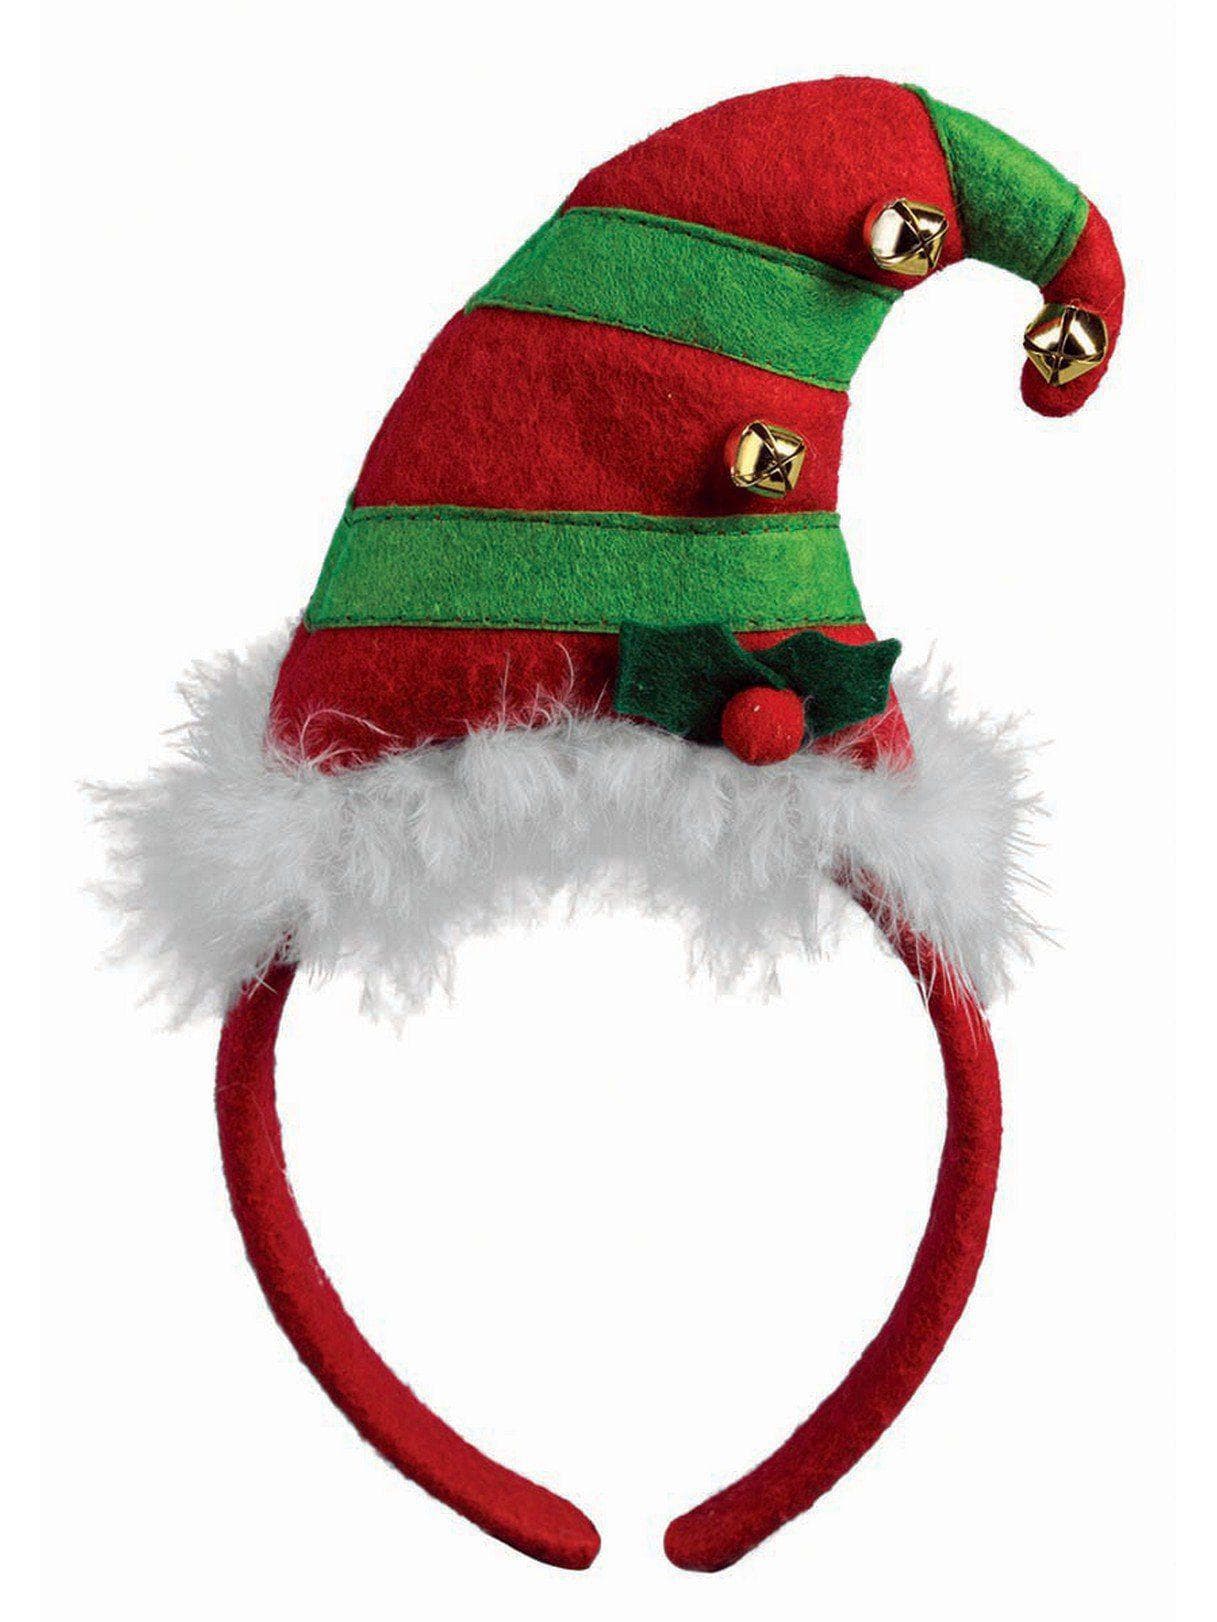 Elf Headband Accessory - costumes.com